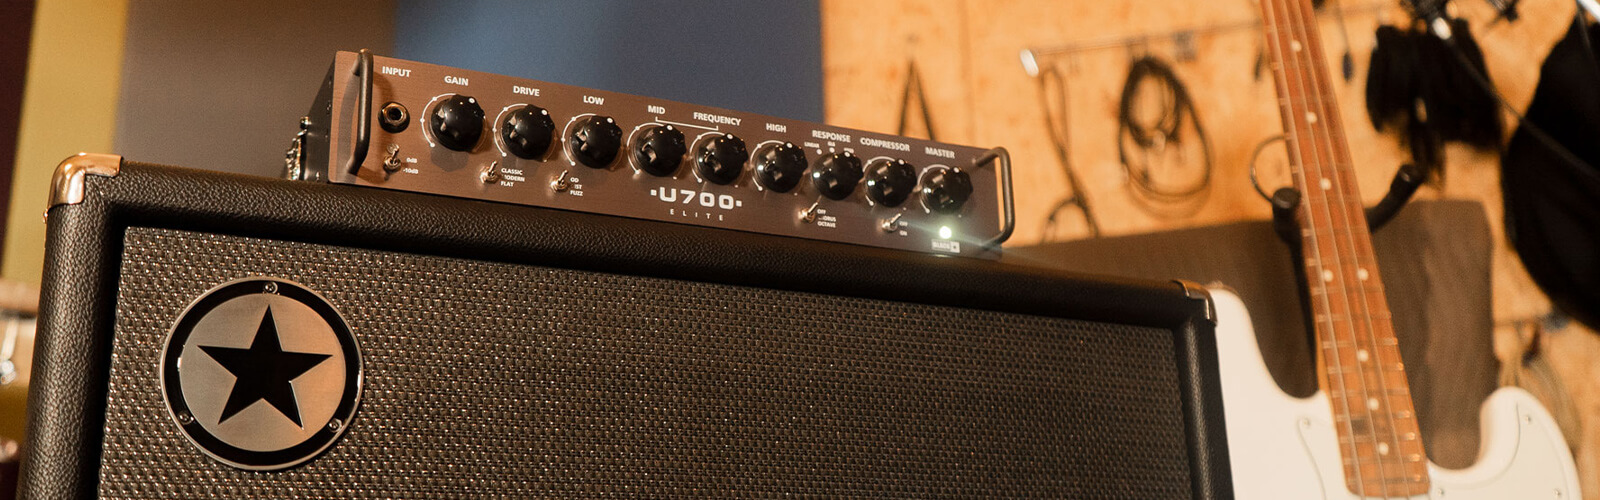 close up view of a blackstar guitar amp control panel